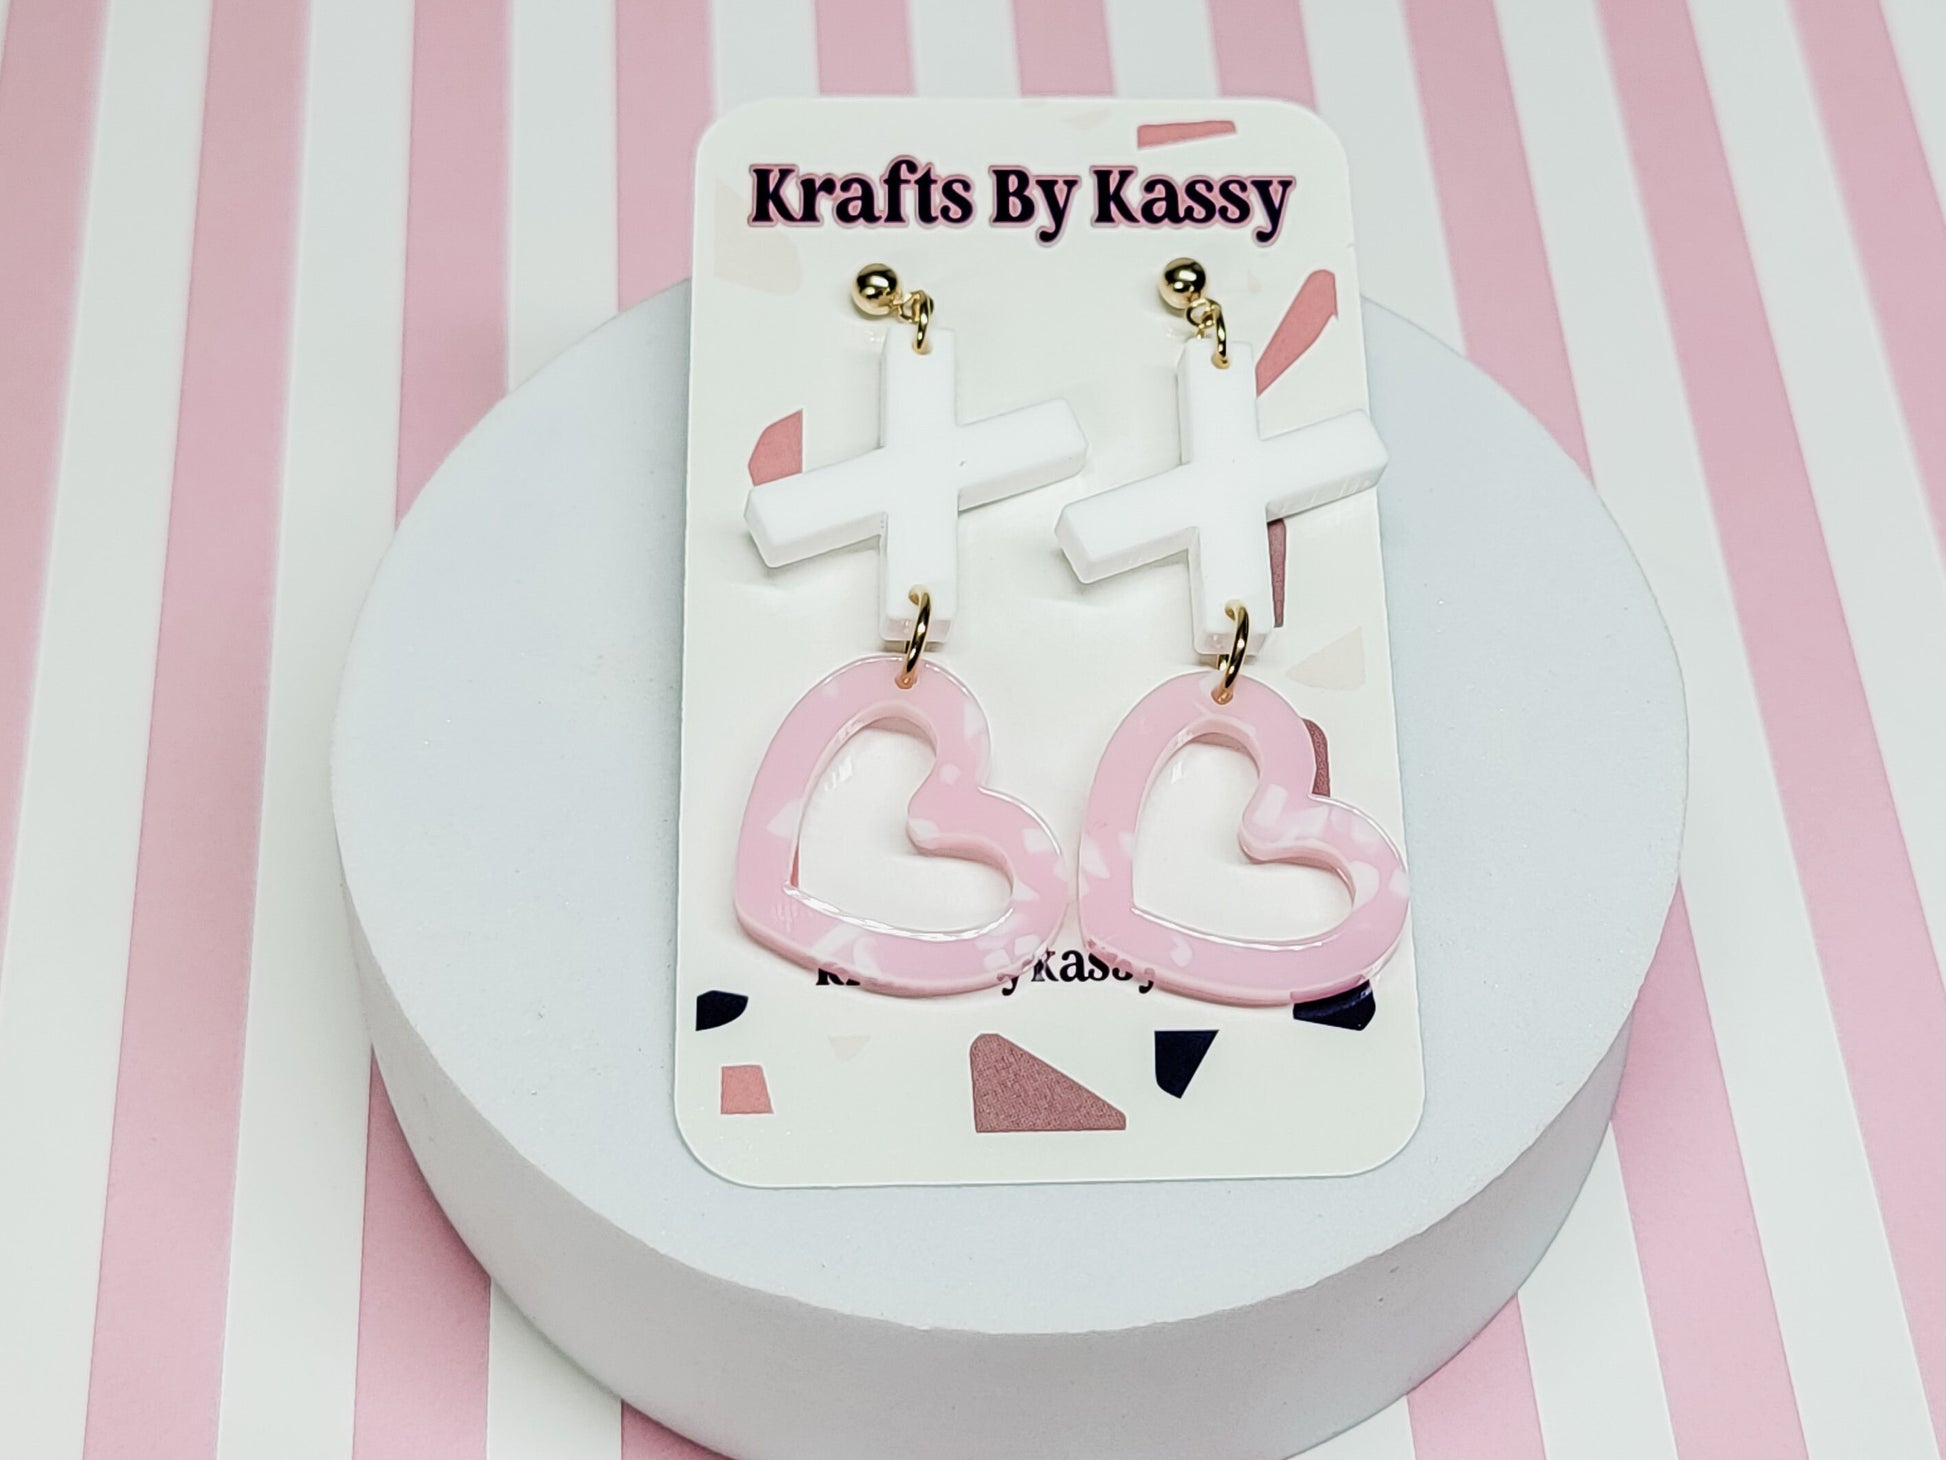 XO Acrylic Earrings, Valentine Jewelry, Fun Accessories, Statement Acrylic Earrings, Heart Acrylic Earrings, Pink Marble